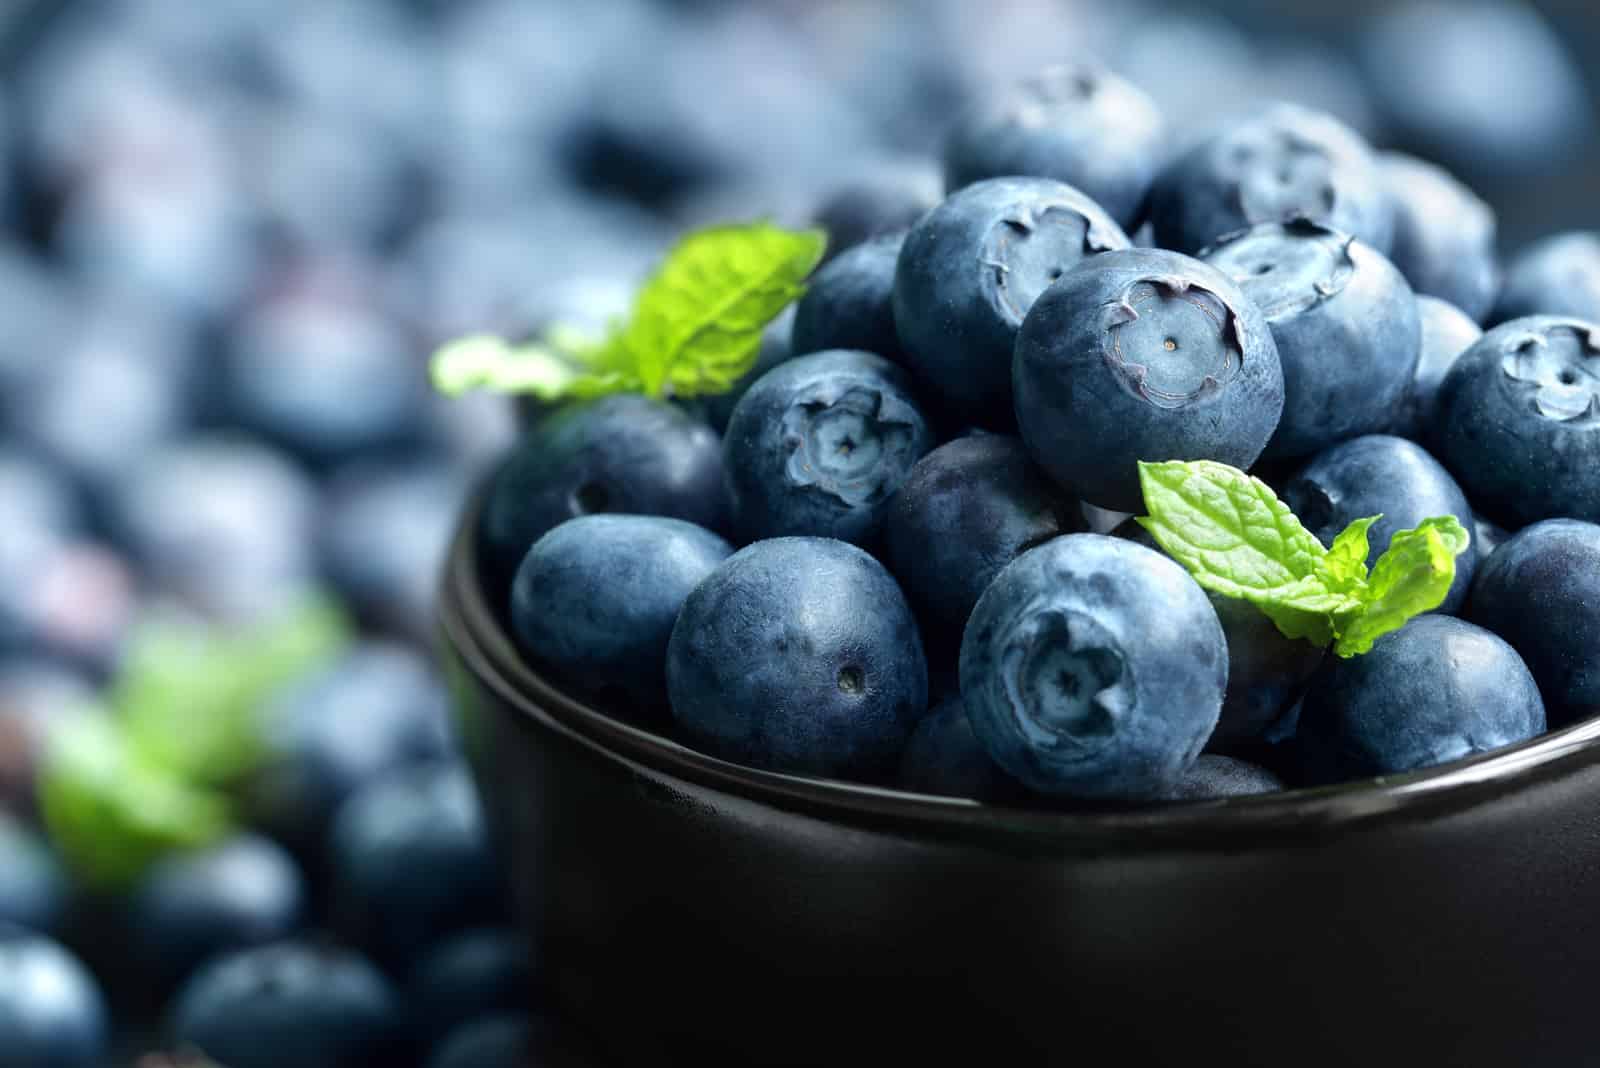 Blueberries in wood bowl